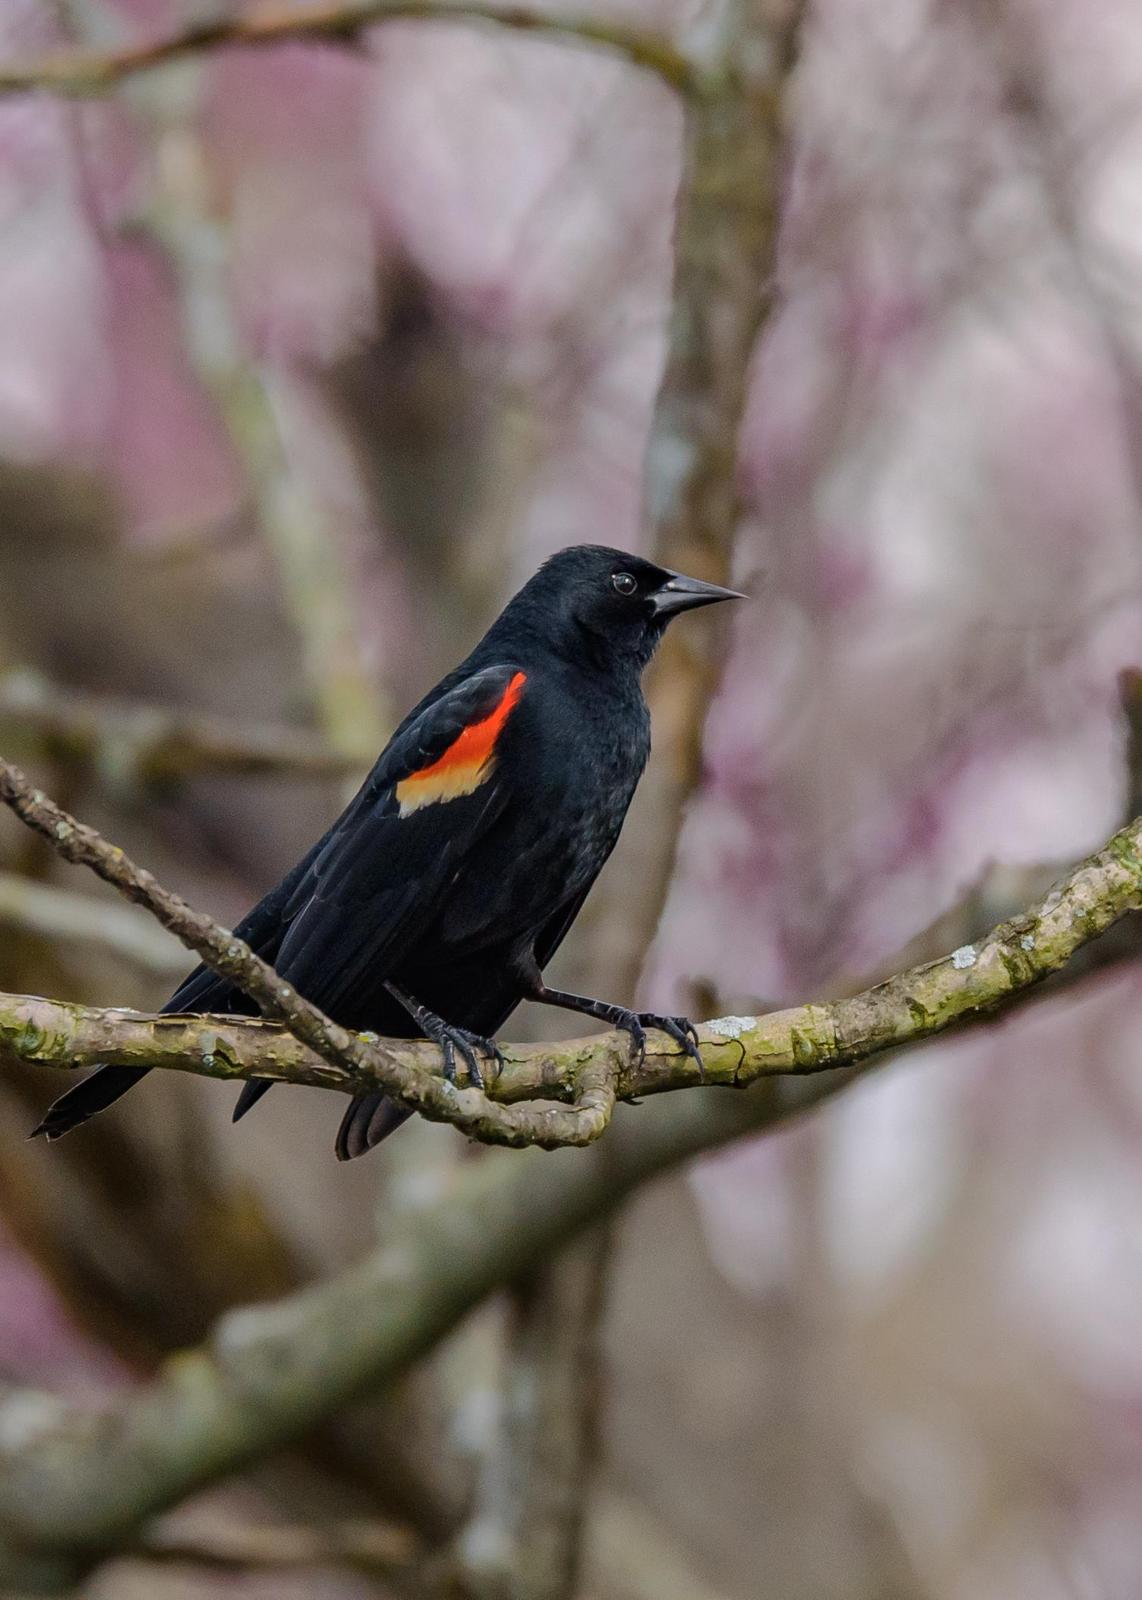 Red-winged Blackbird Photo by Keshava Mysore